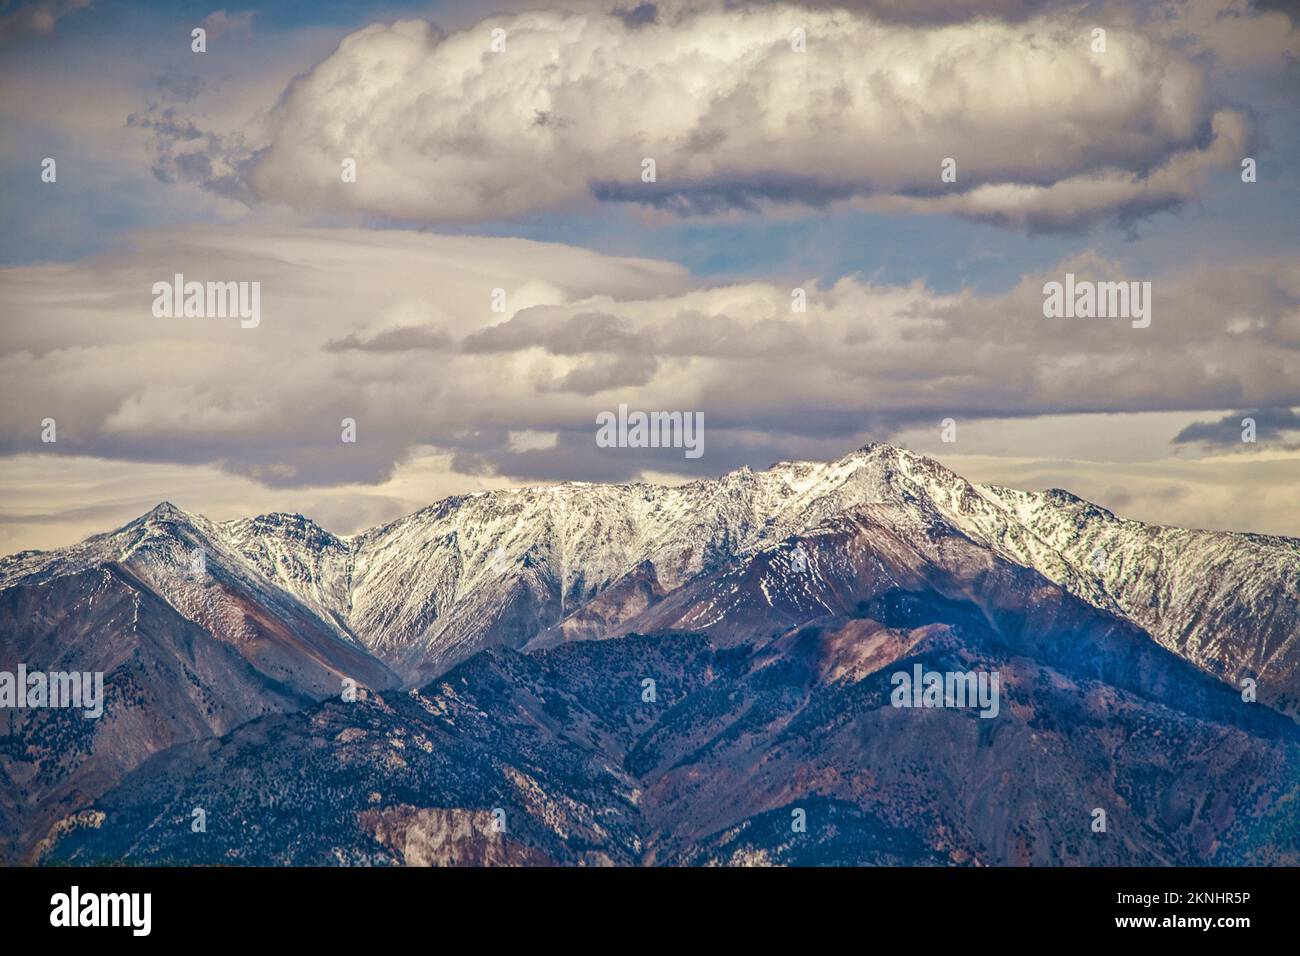 Puple mountains - majestic Sierra Nevanda range of eastern California  USA with snow-topped peaks under dramatic sky. Stock Photo